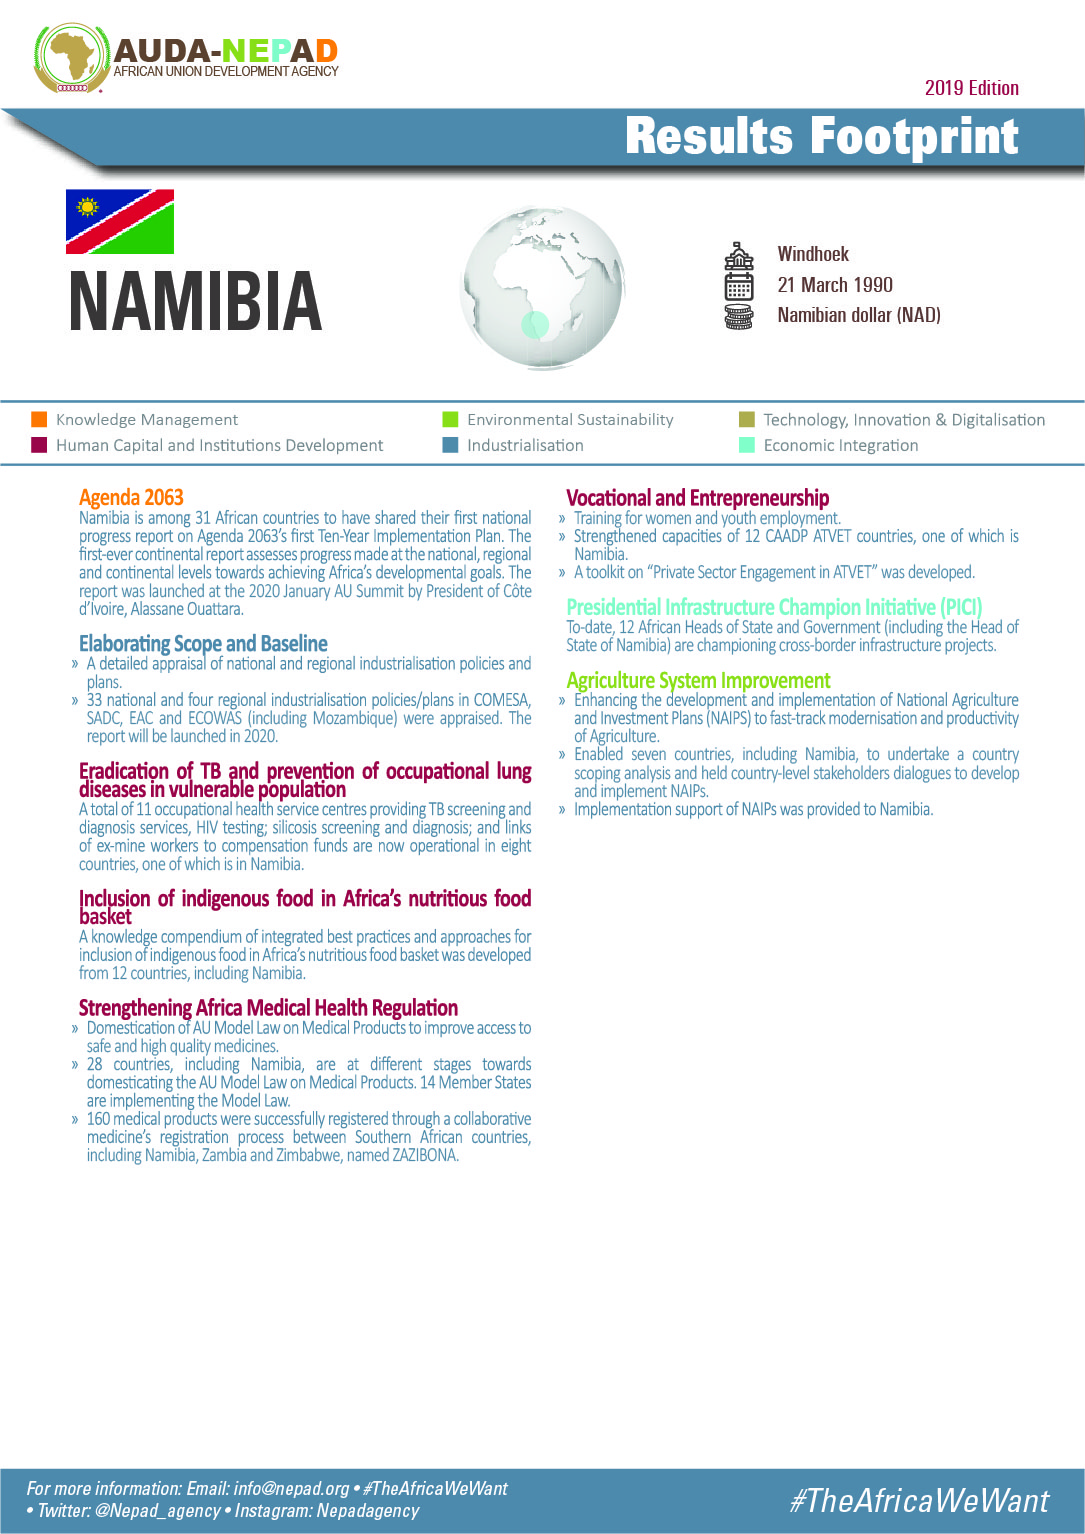 2019 AUDA-NEPAD Footprint: Country Profiles: Namibia